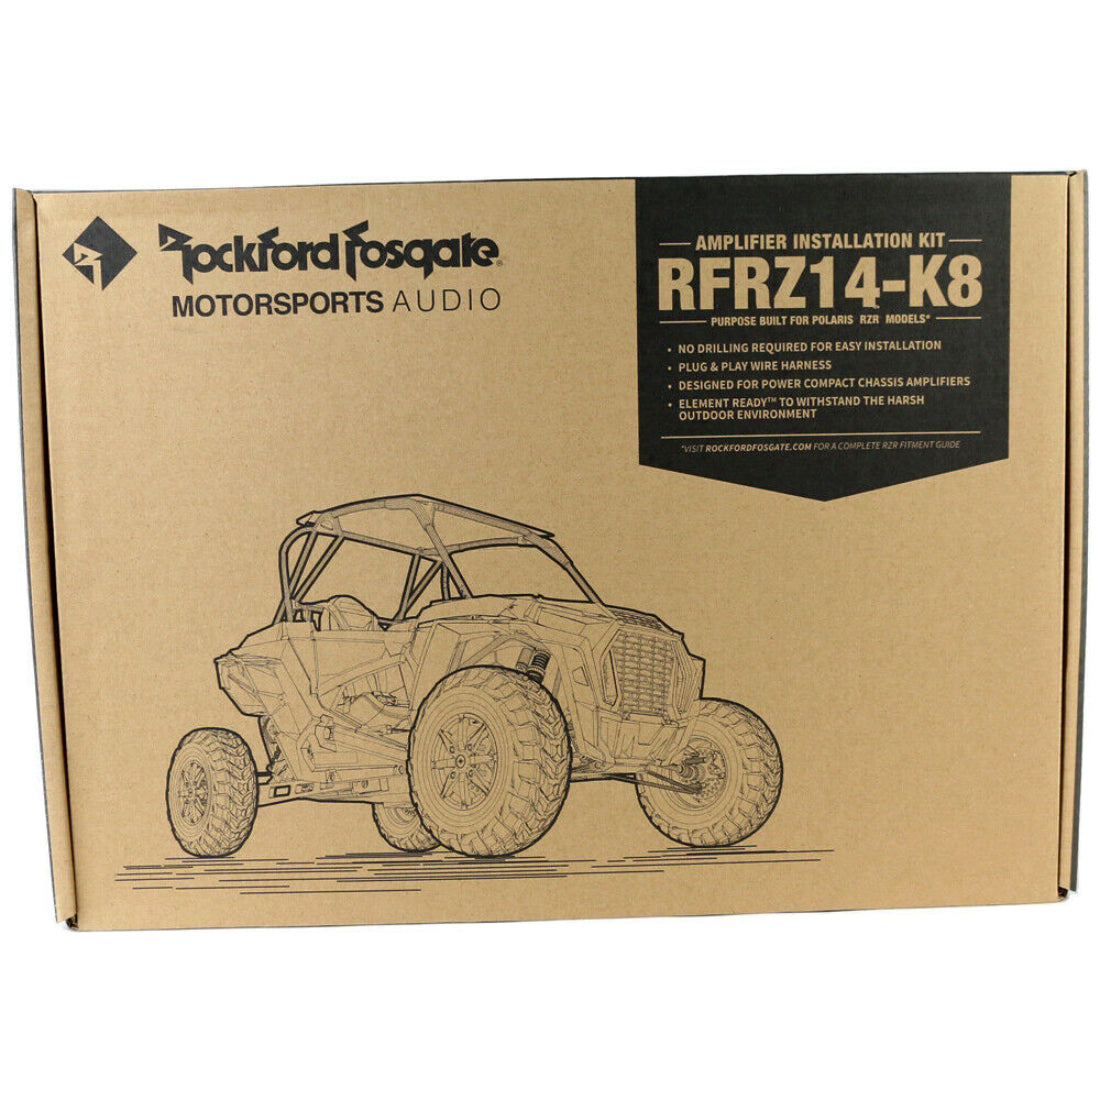 Rockford Fosgate RFRZ14-K8 8 AWG Amp Kit & Mounting Plate for Select Polaris RZR